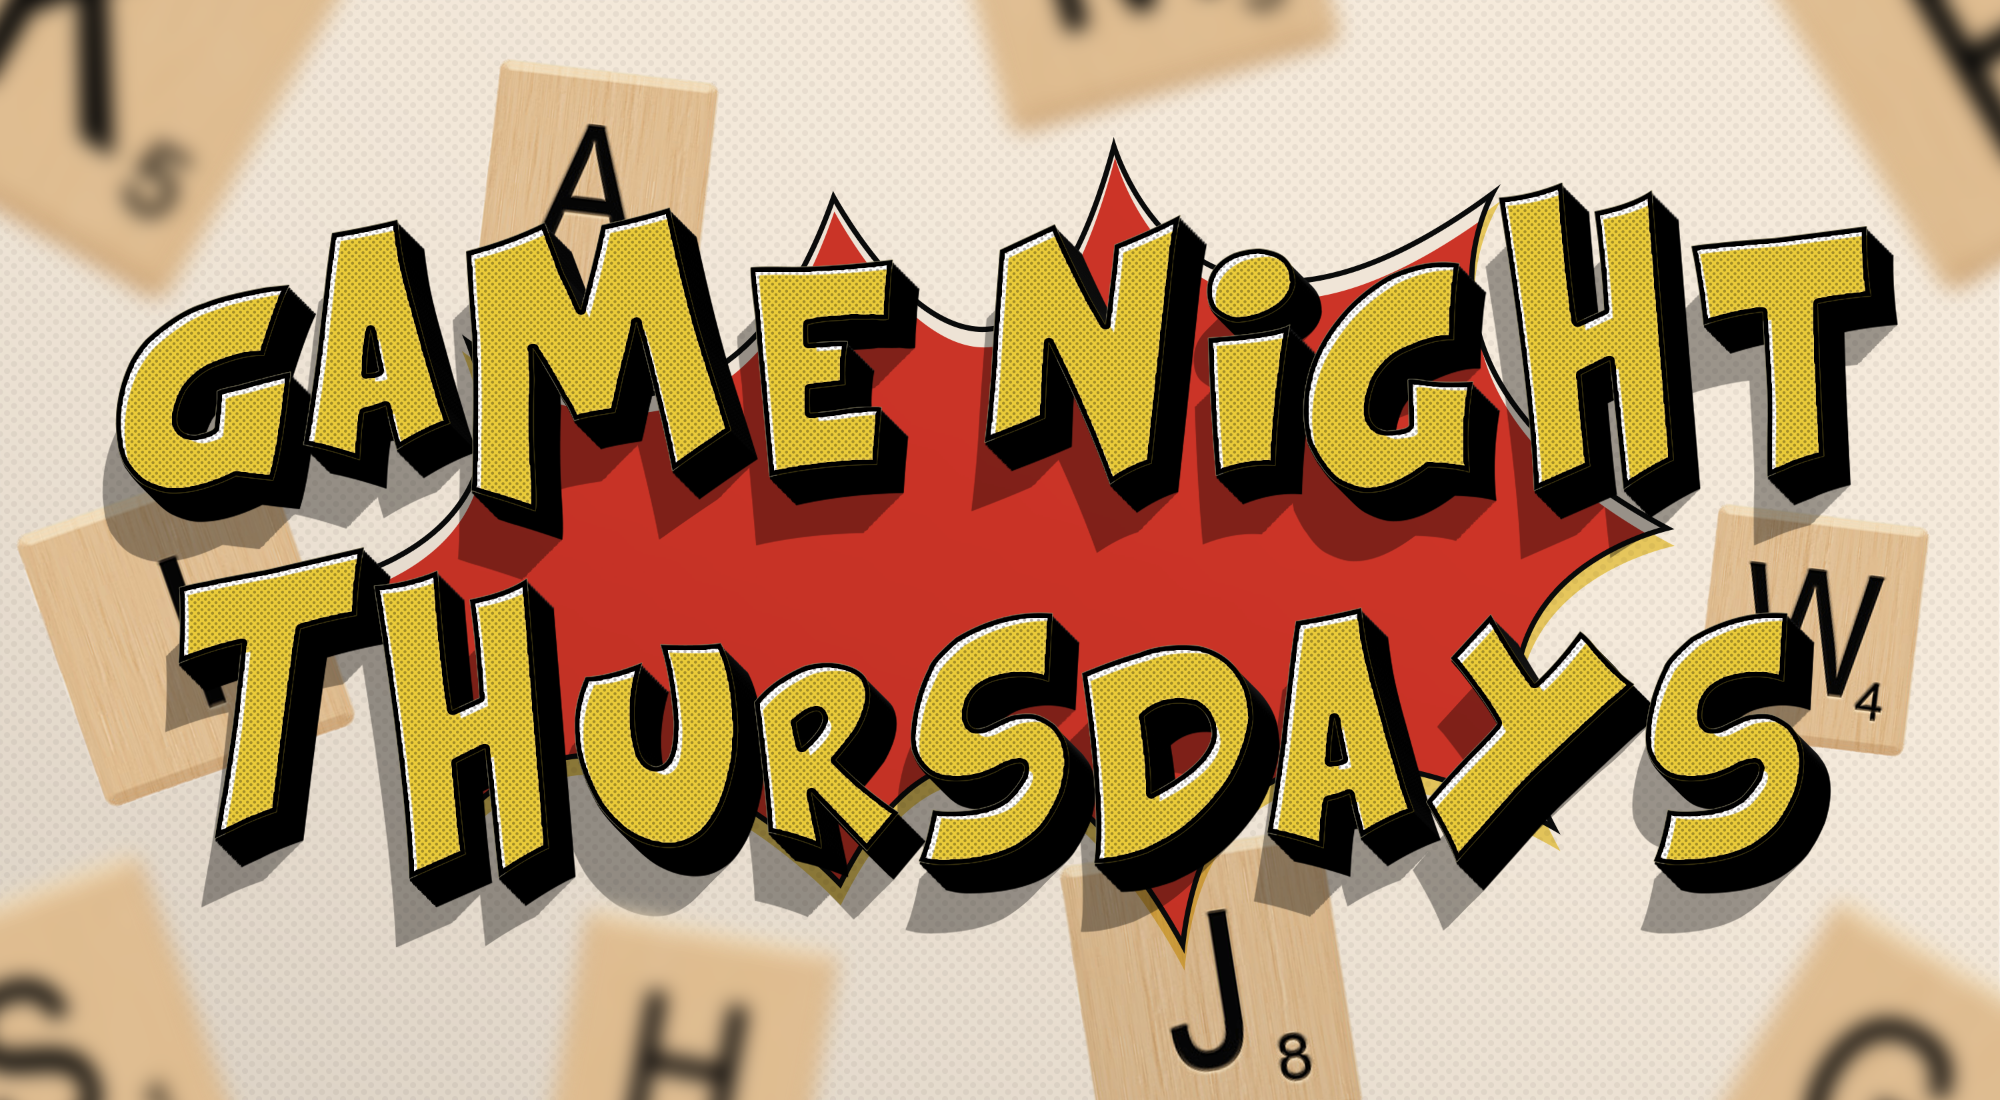 Game Night Thursdays - Scrabble Duplicate